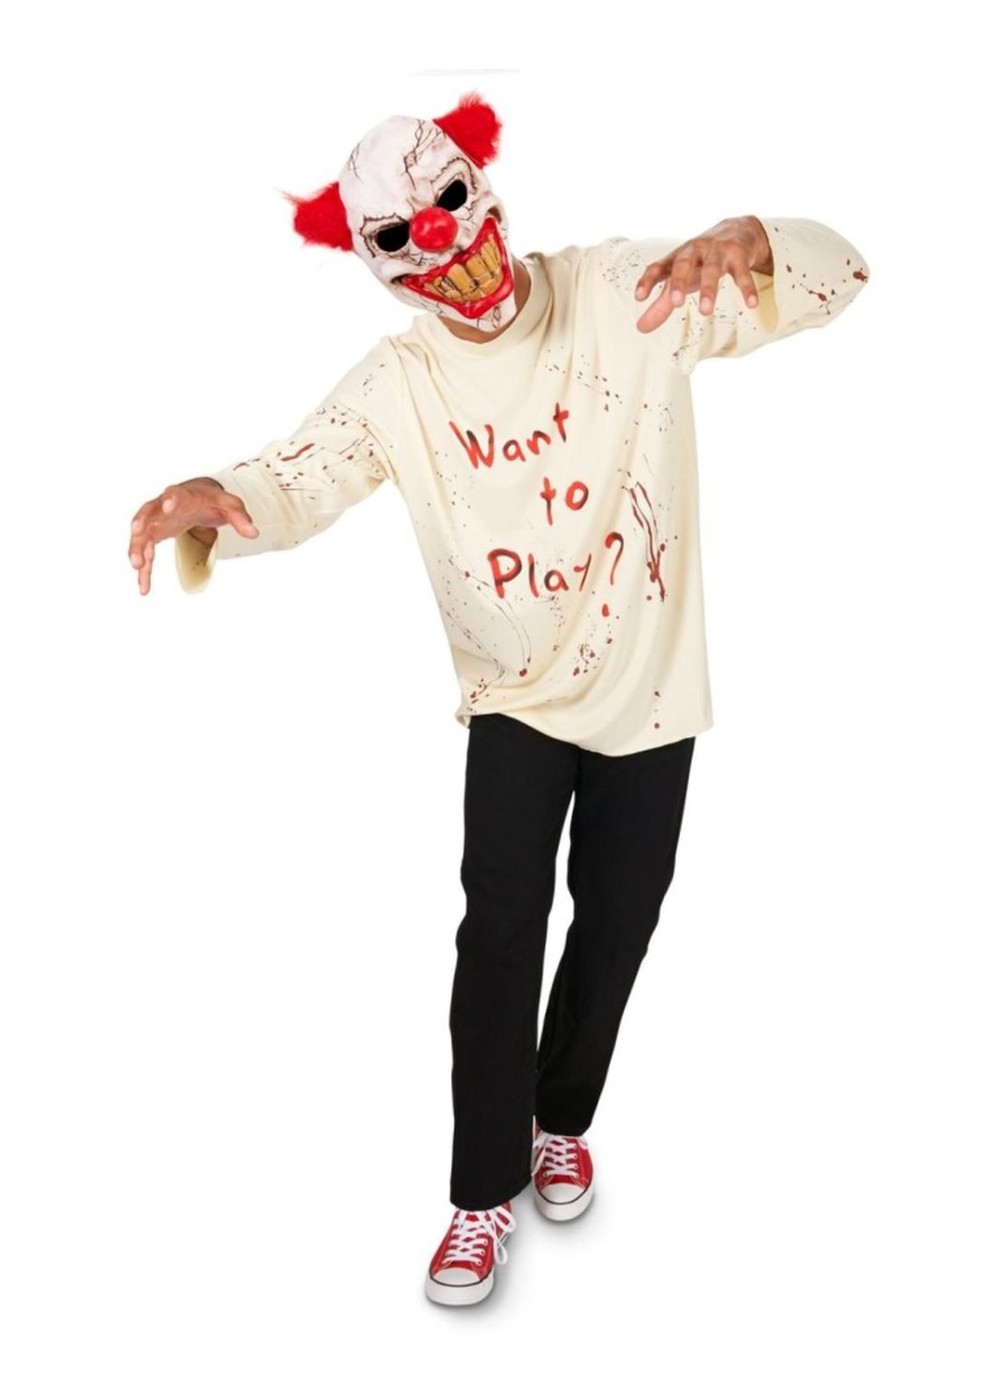 Sinister Playground Clown Mens Costume